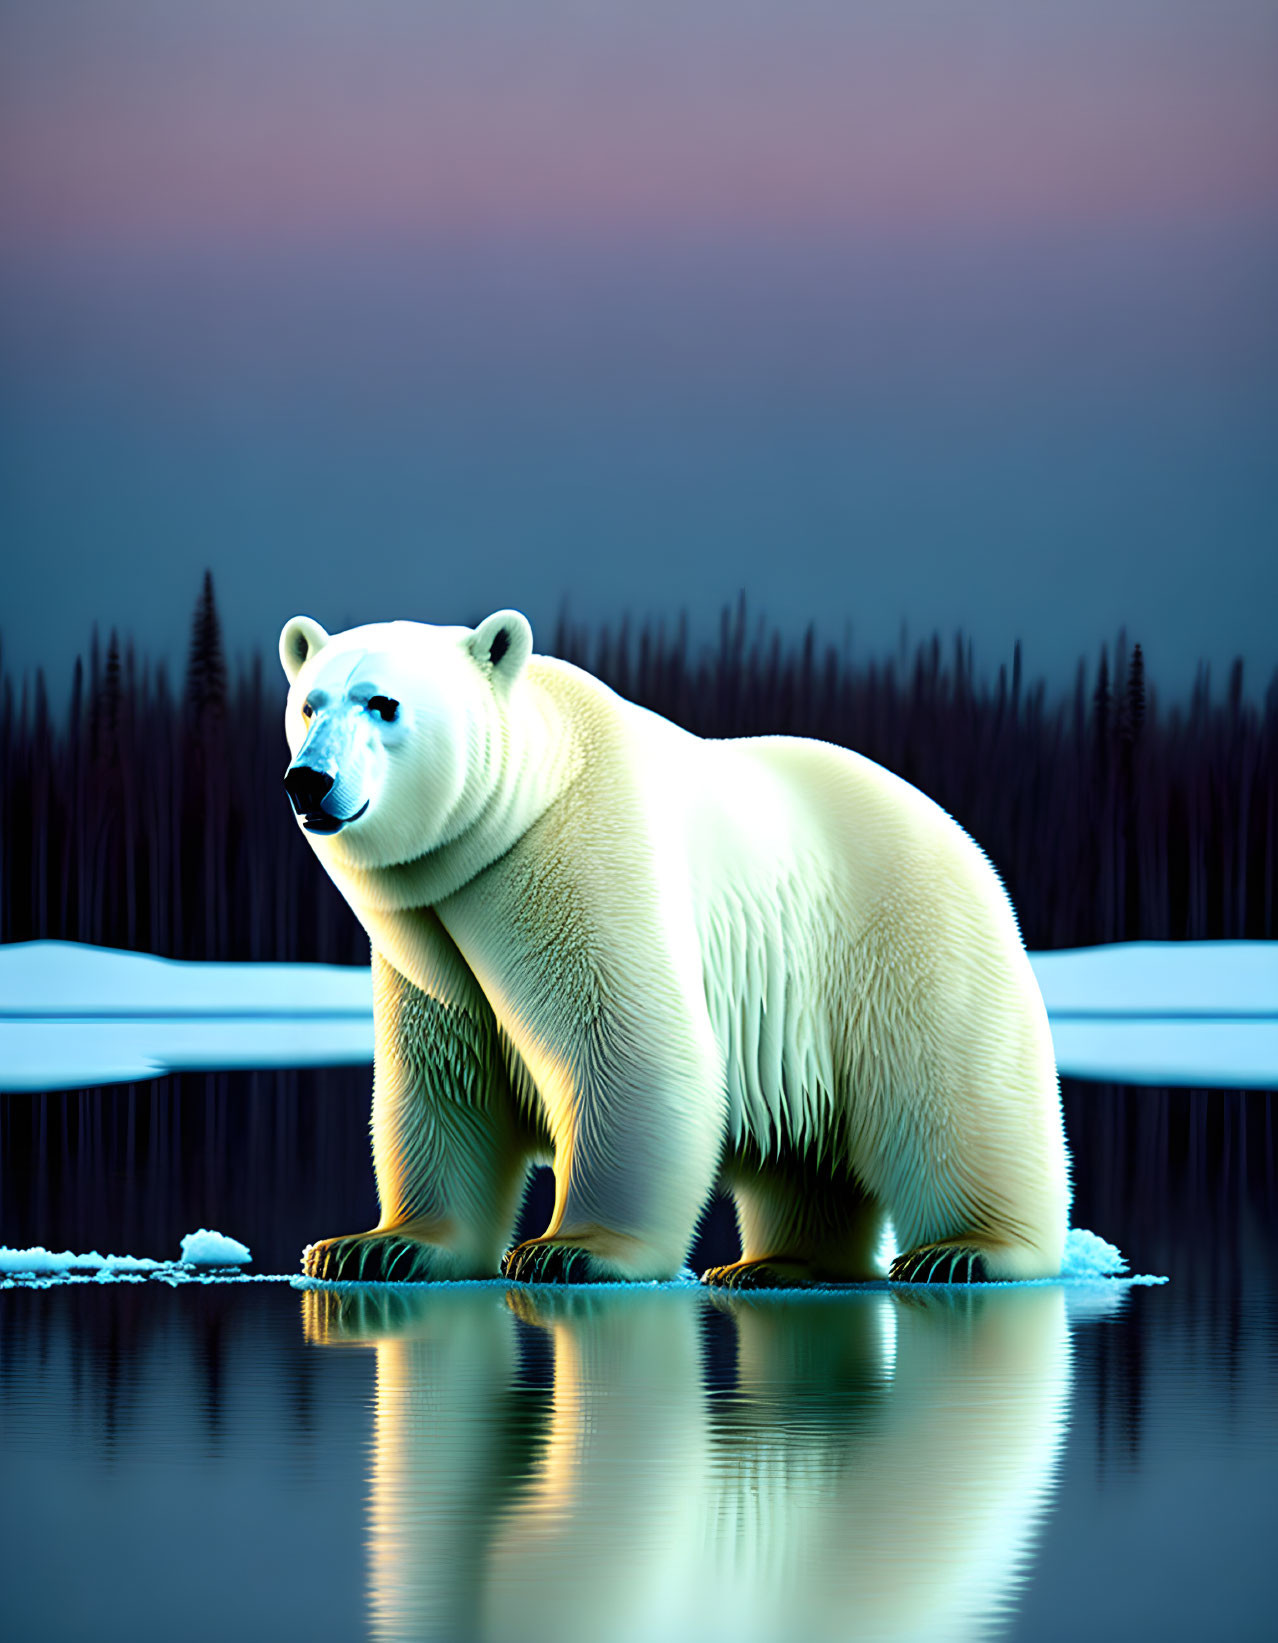 Polar bear on ice floe with twilight sky and forest silhouette